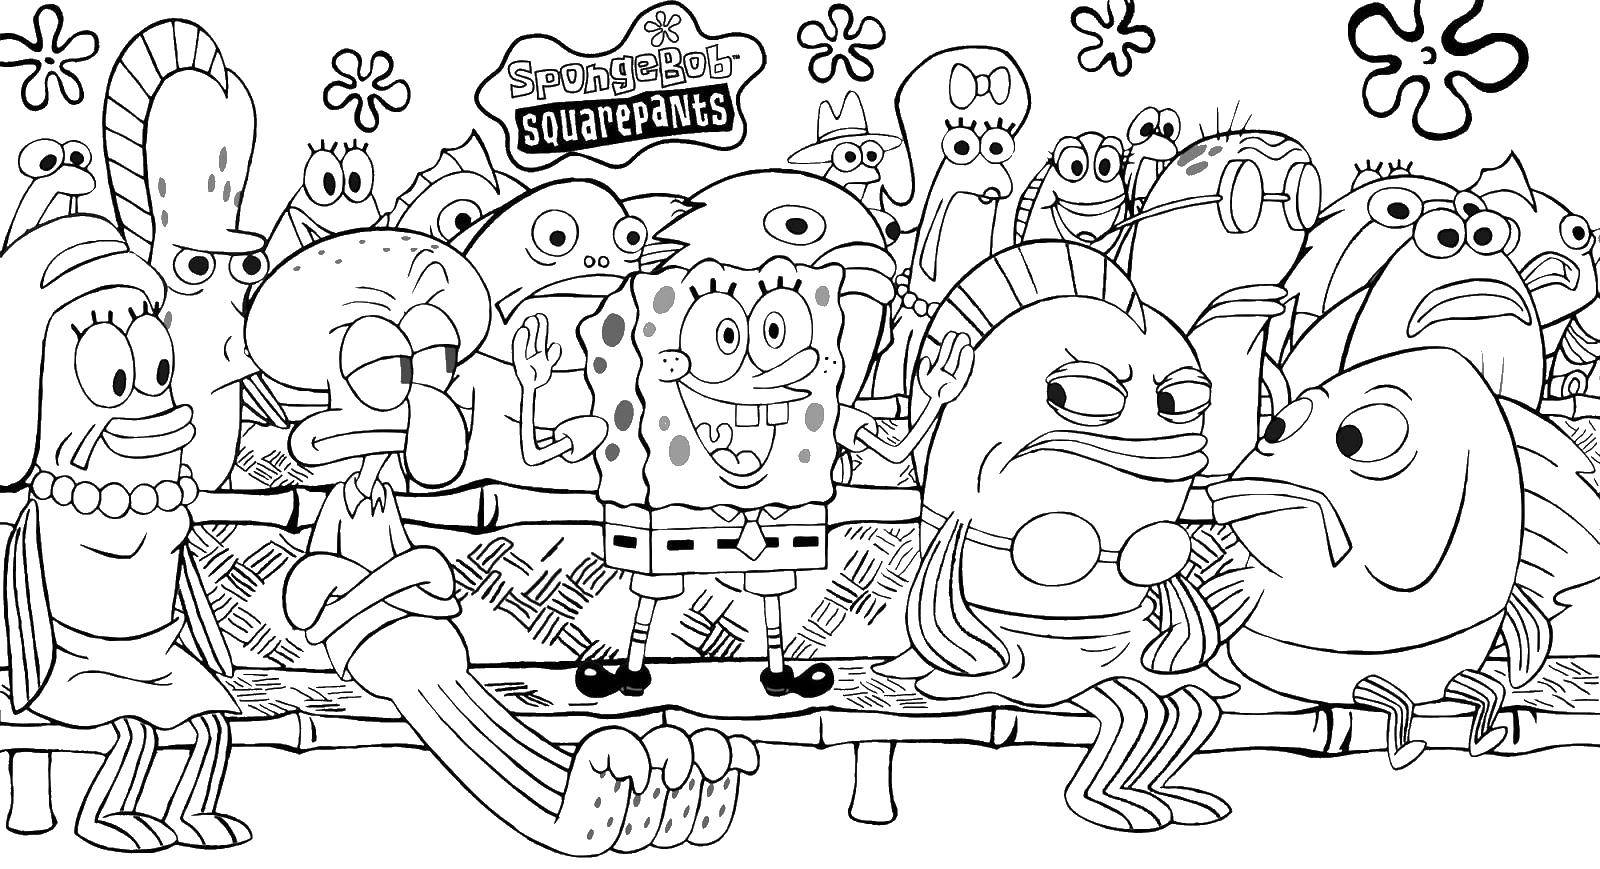 Coloring Spongebob and other fish. Category Spongebob. Tags:  The spongebob, characters, cartoons.